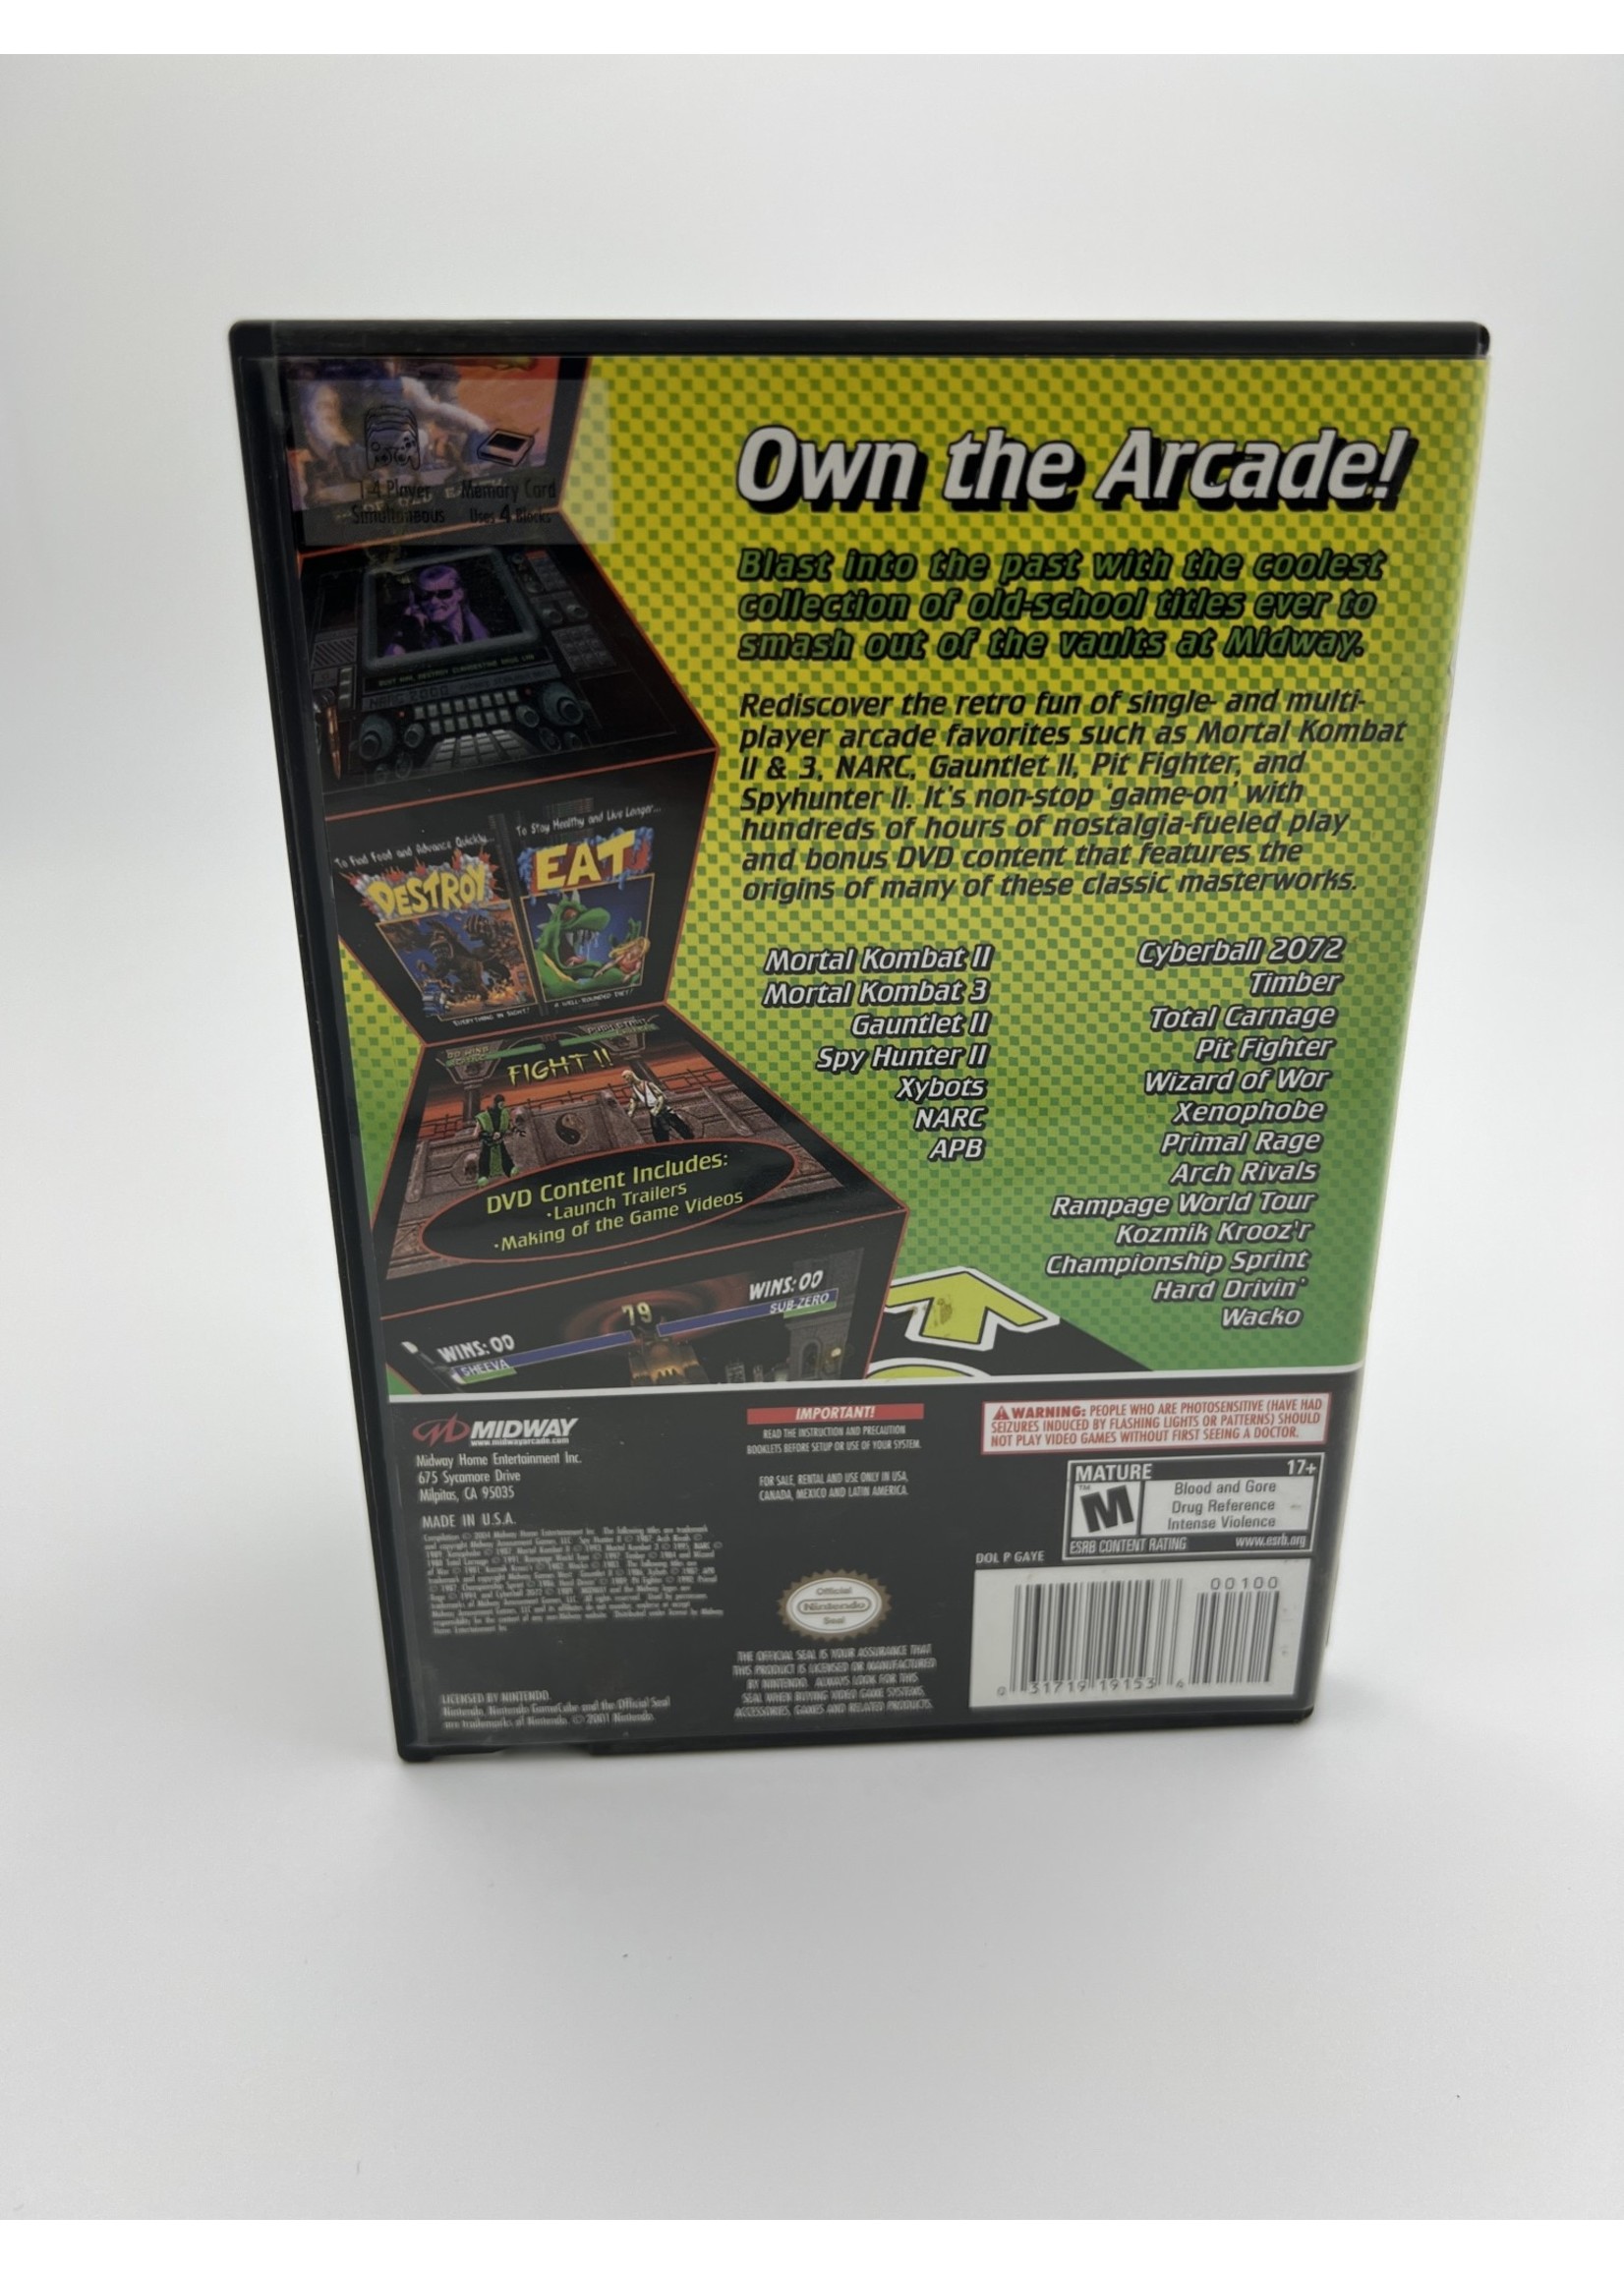 Nintendo Midway Arcade Treasures 2 Gamecube